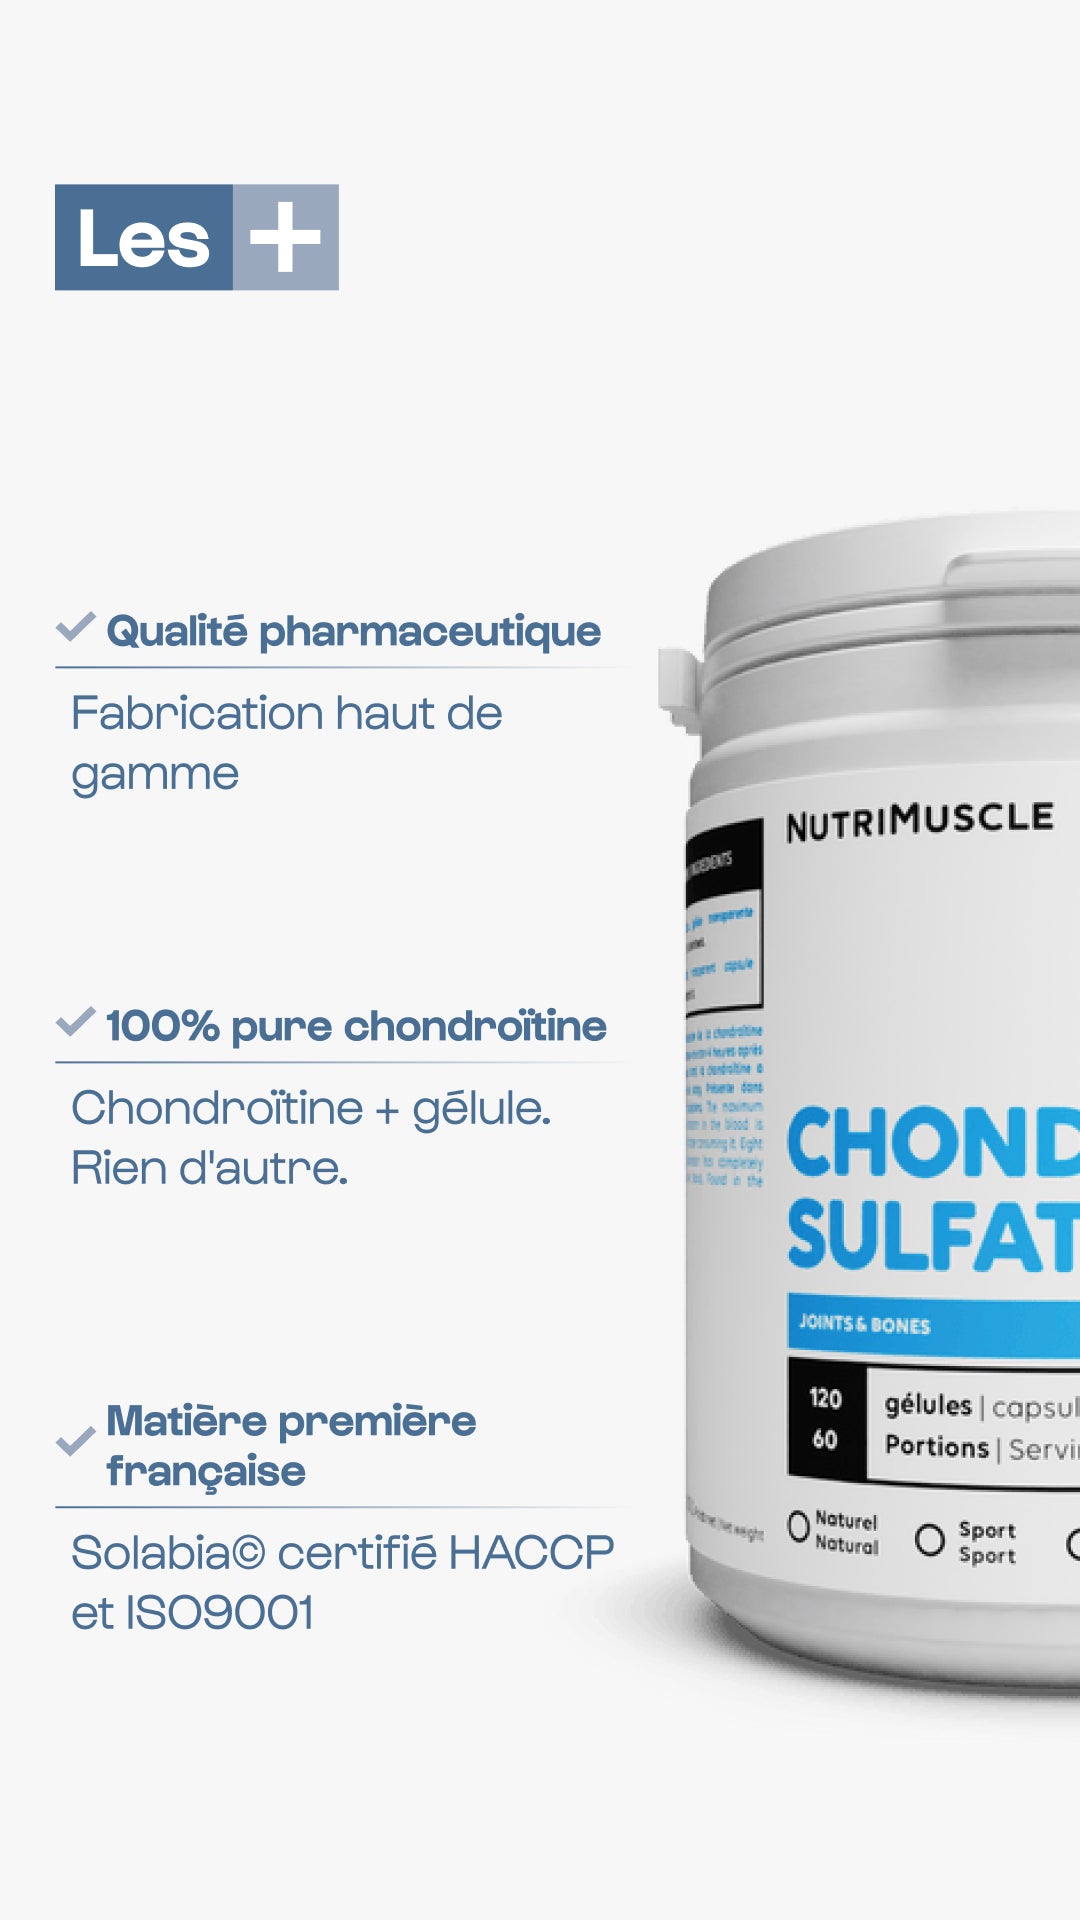 Powder sulfate chondroitine